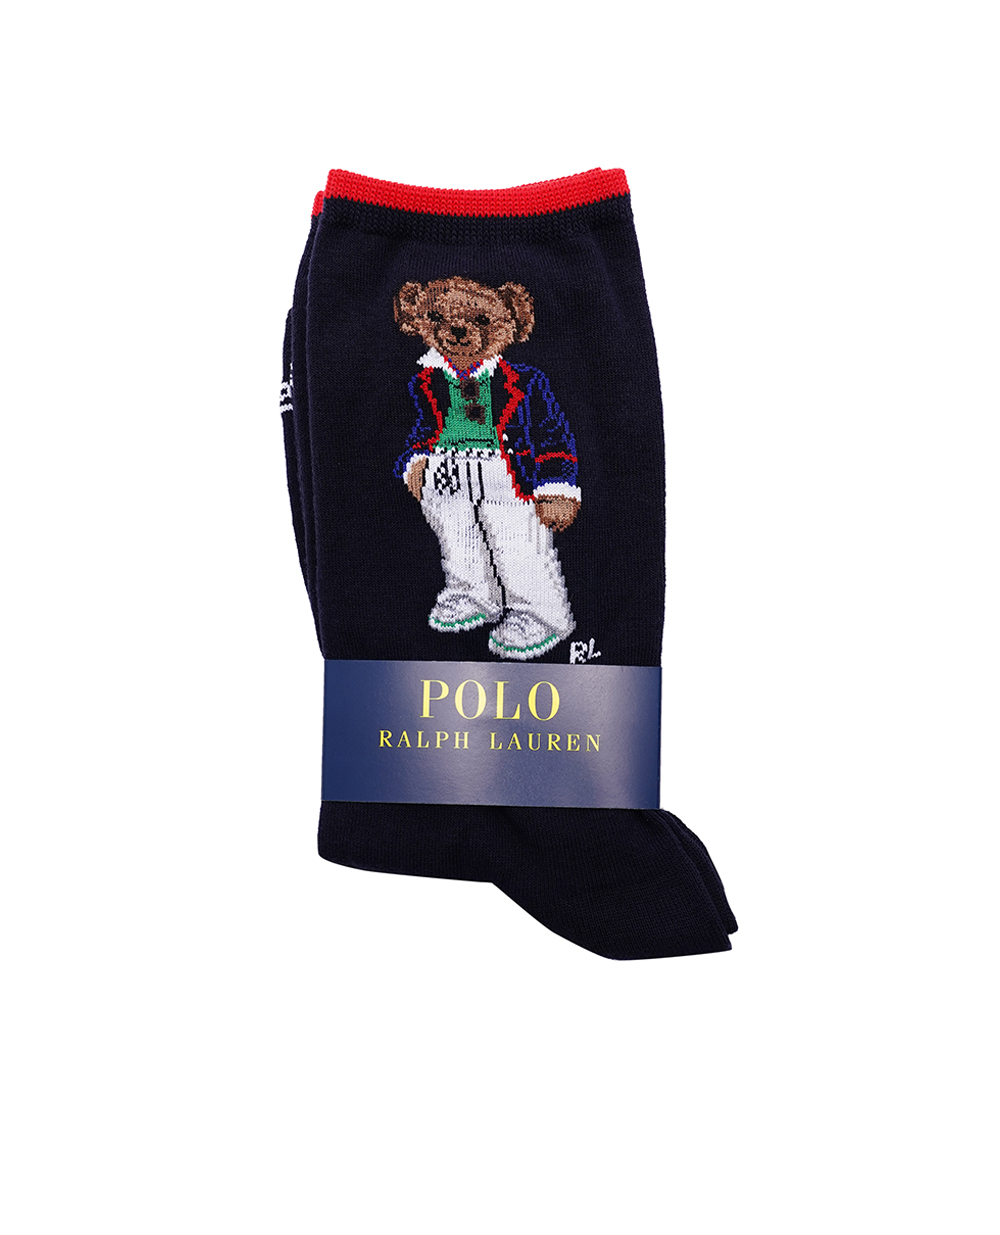 Носки Polo Bear Polo Ralph Lauren 455942325002, темно-синий цвет • Купить в интернет-магазине Kameron